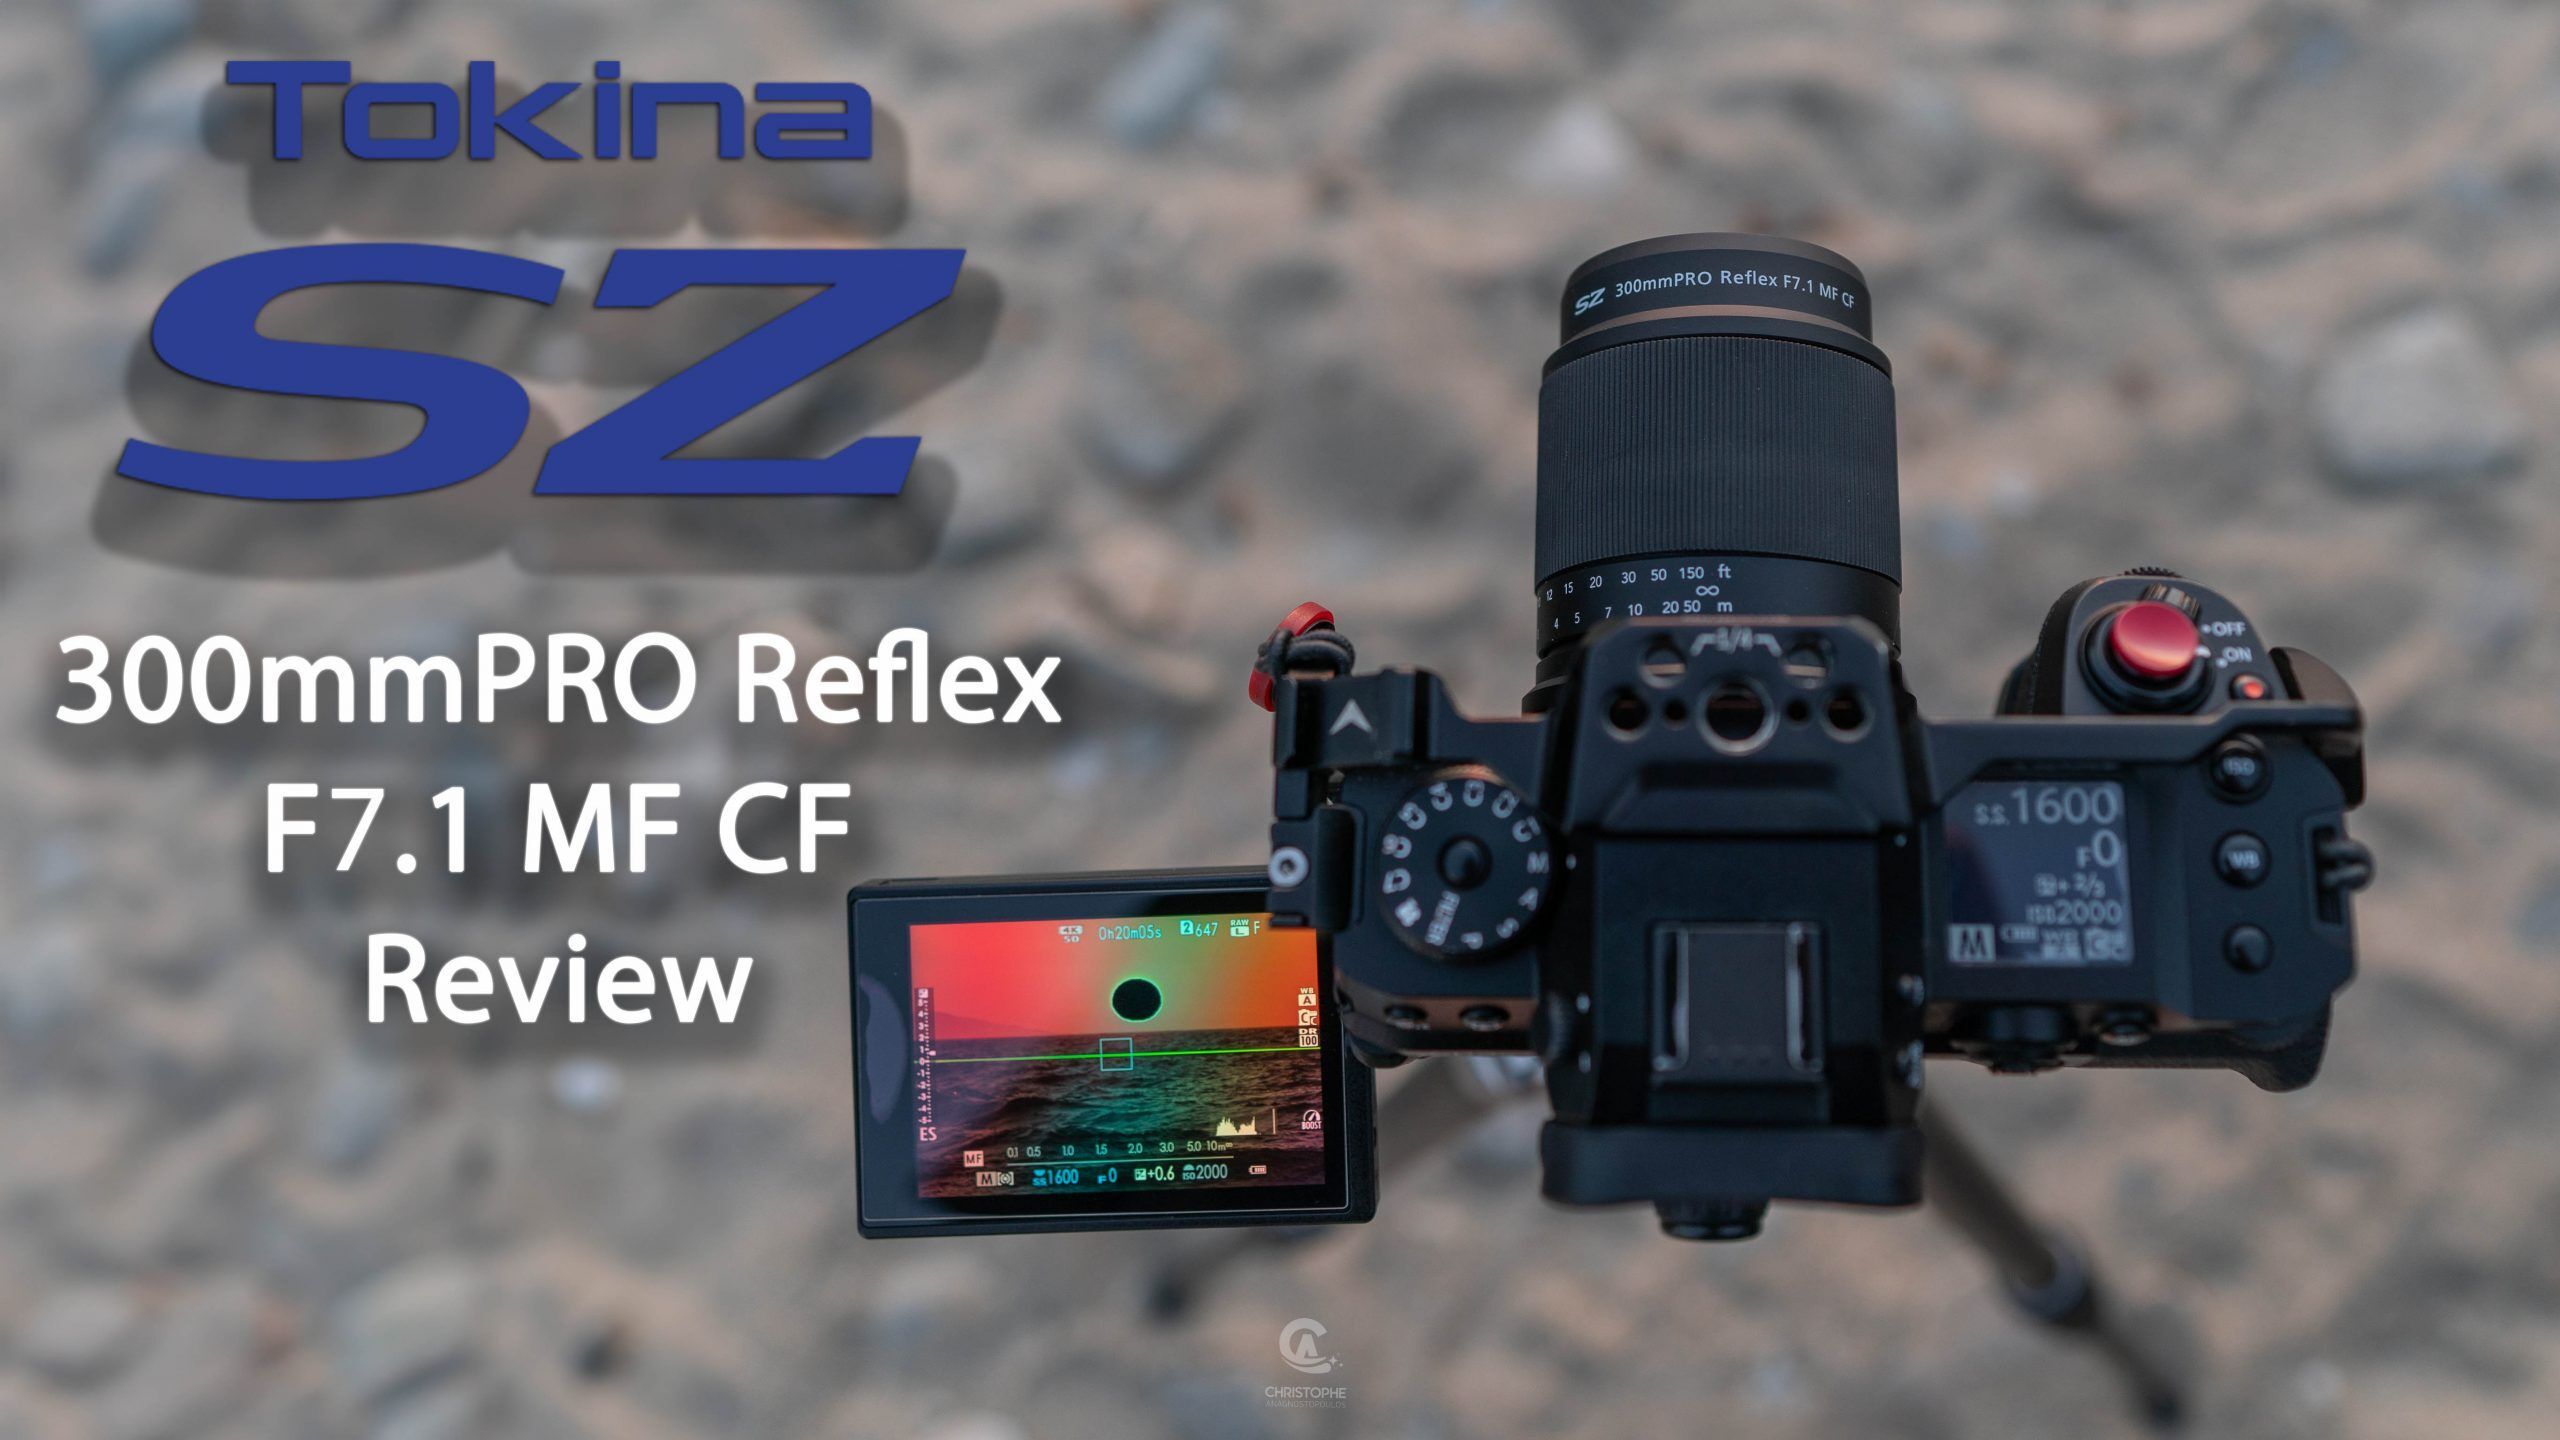 Tokina SZ 300mmPRO Reflex F7.1 MF CF Review